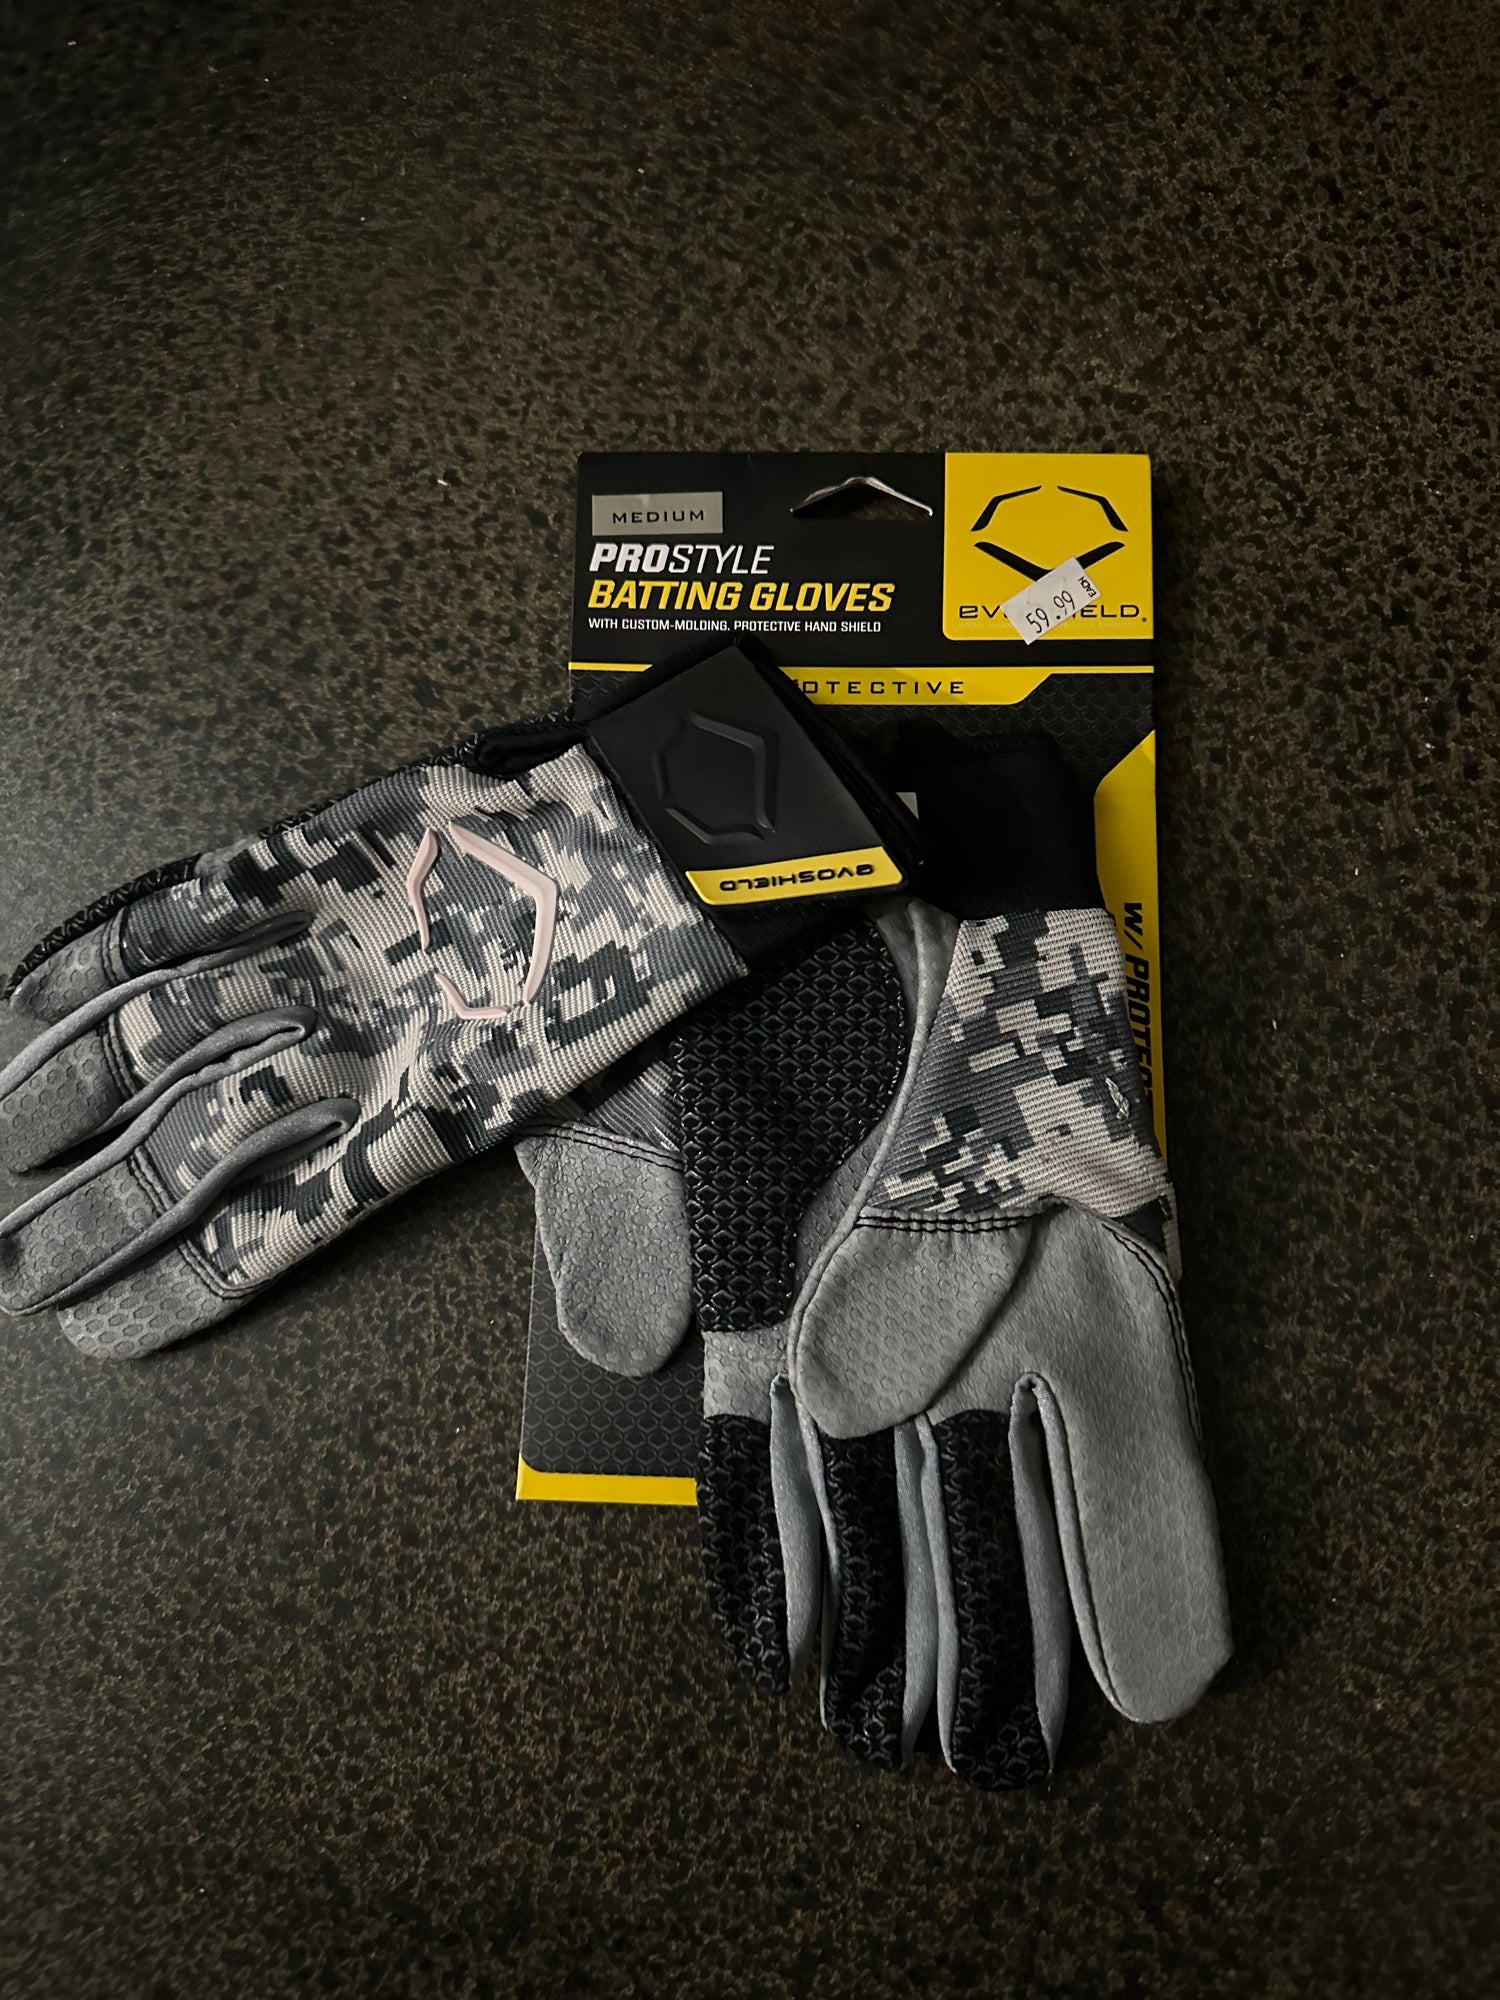 New Medium EvoShield Batting Gloves